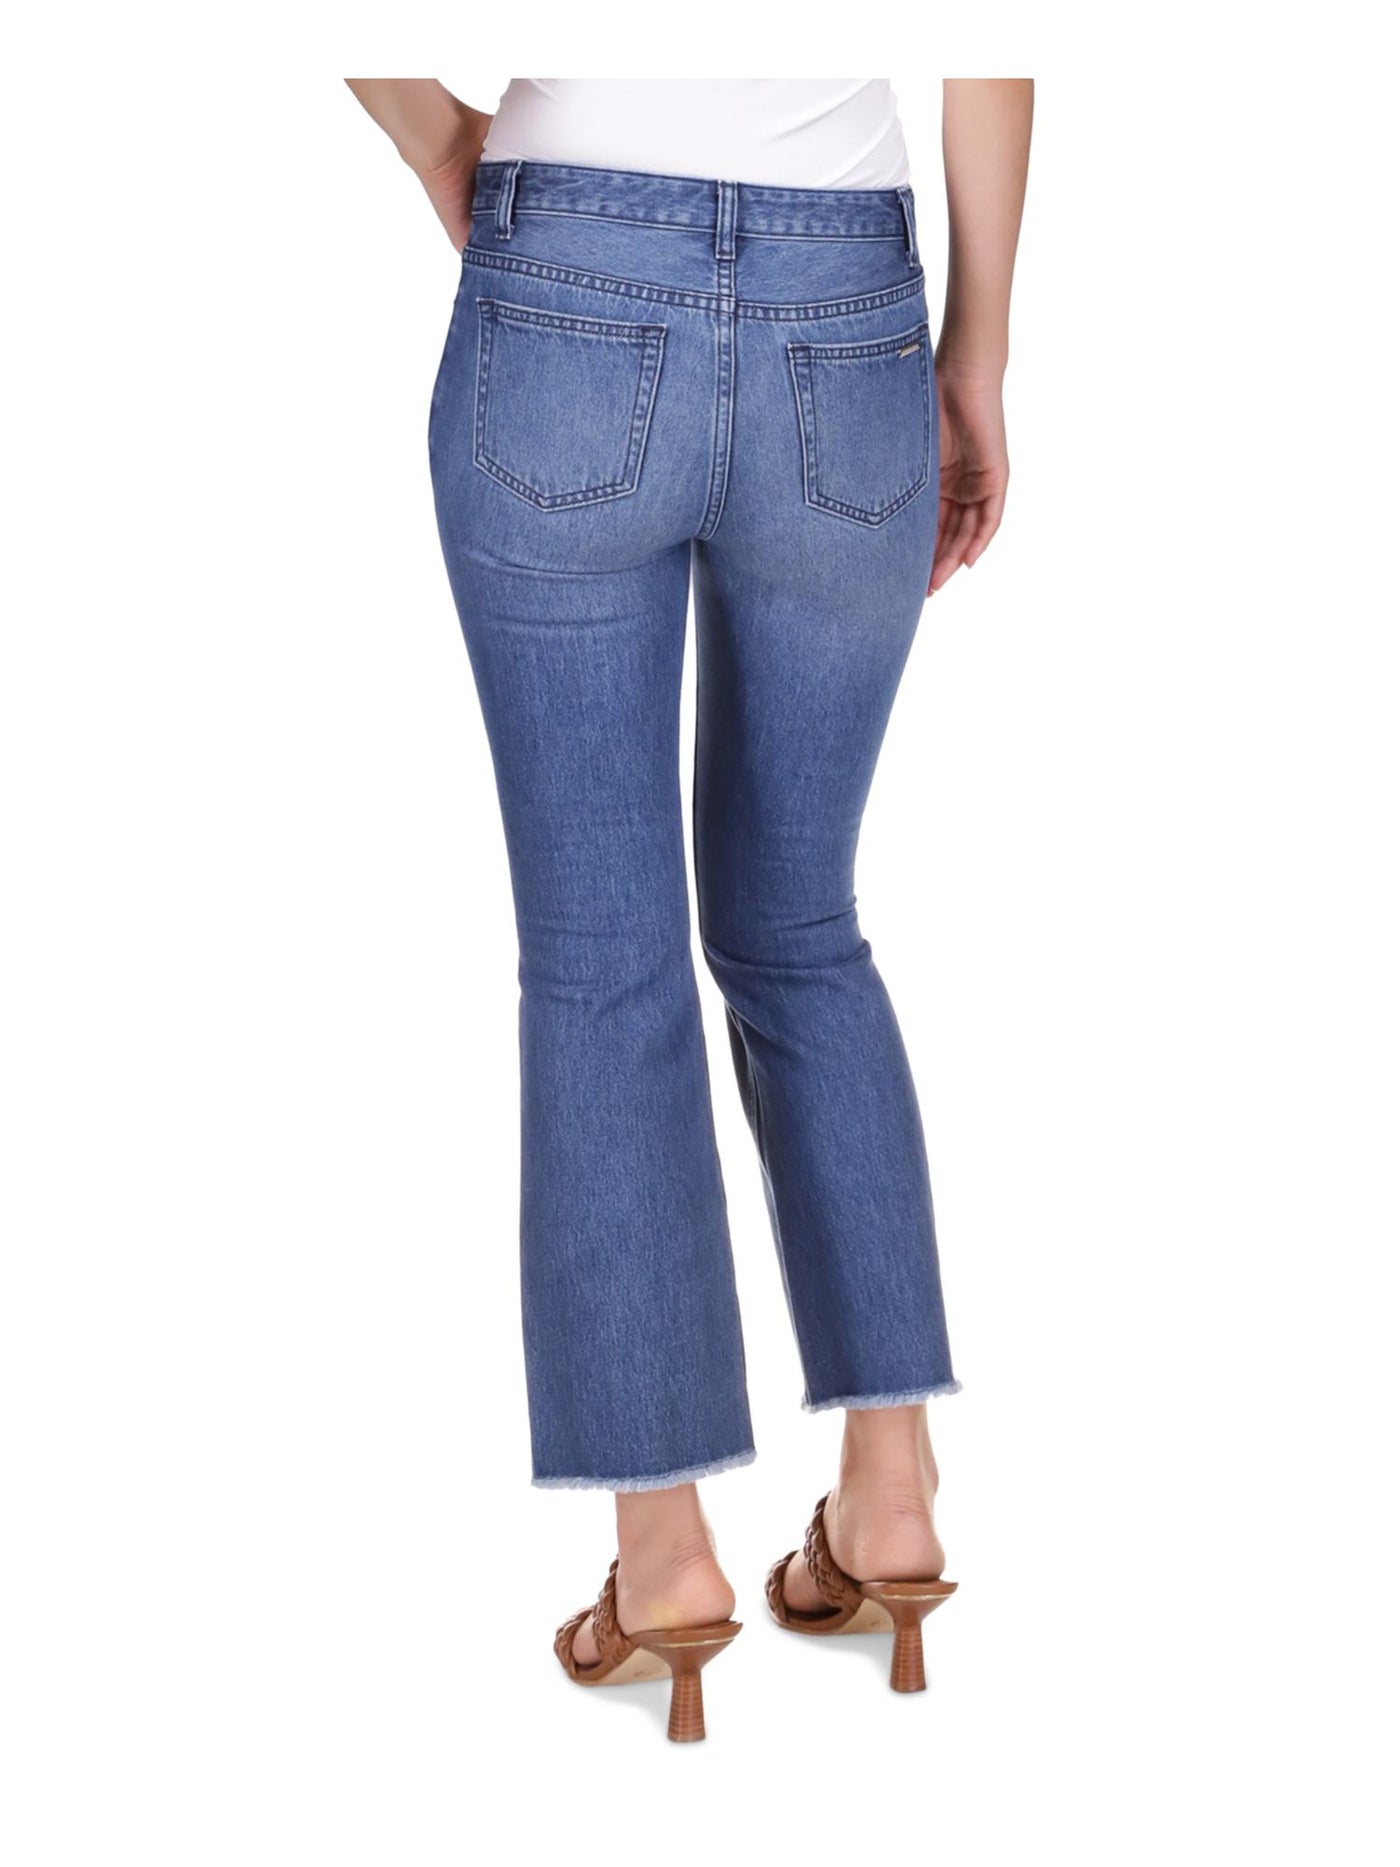 MICHAEL KORS Womens Blue Zippered Pocketed Button Fly Raw Hem Straight leg Jeans Petites 14P